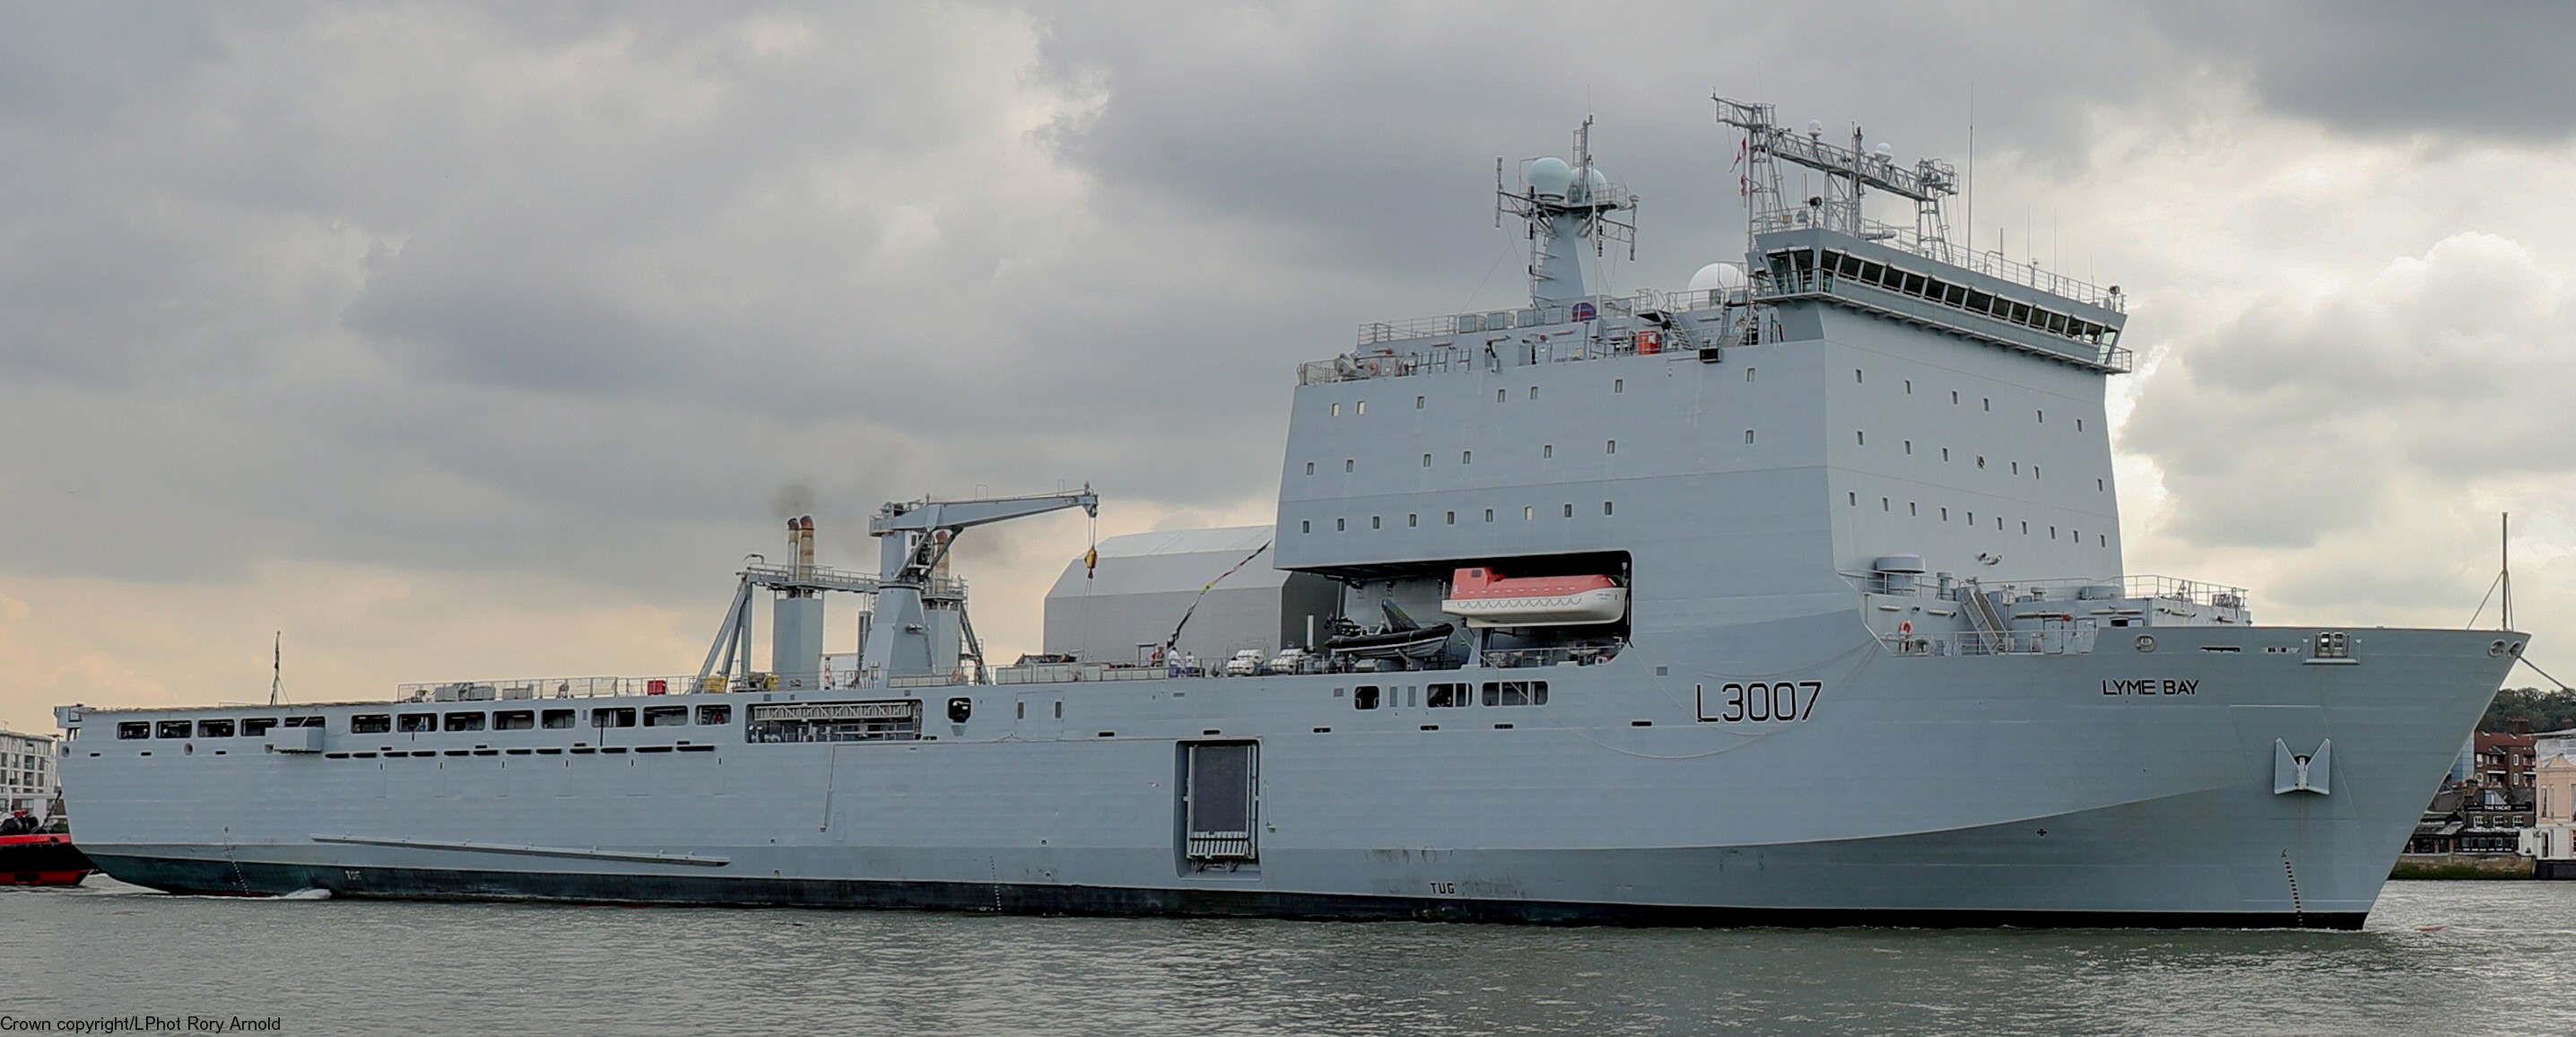 l-3007 rfa lyme bay dock landing ship royal fleet auxilary navy 29